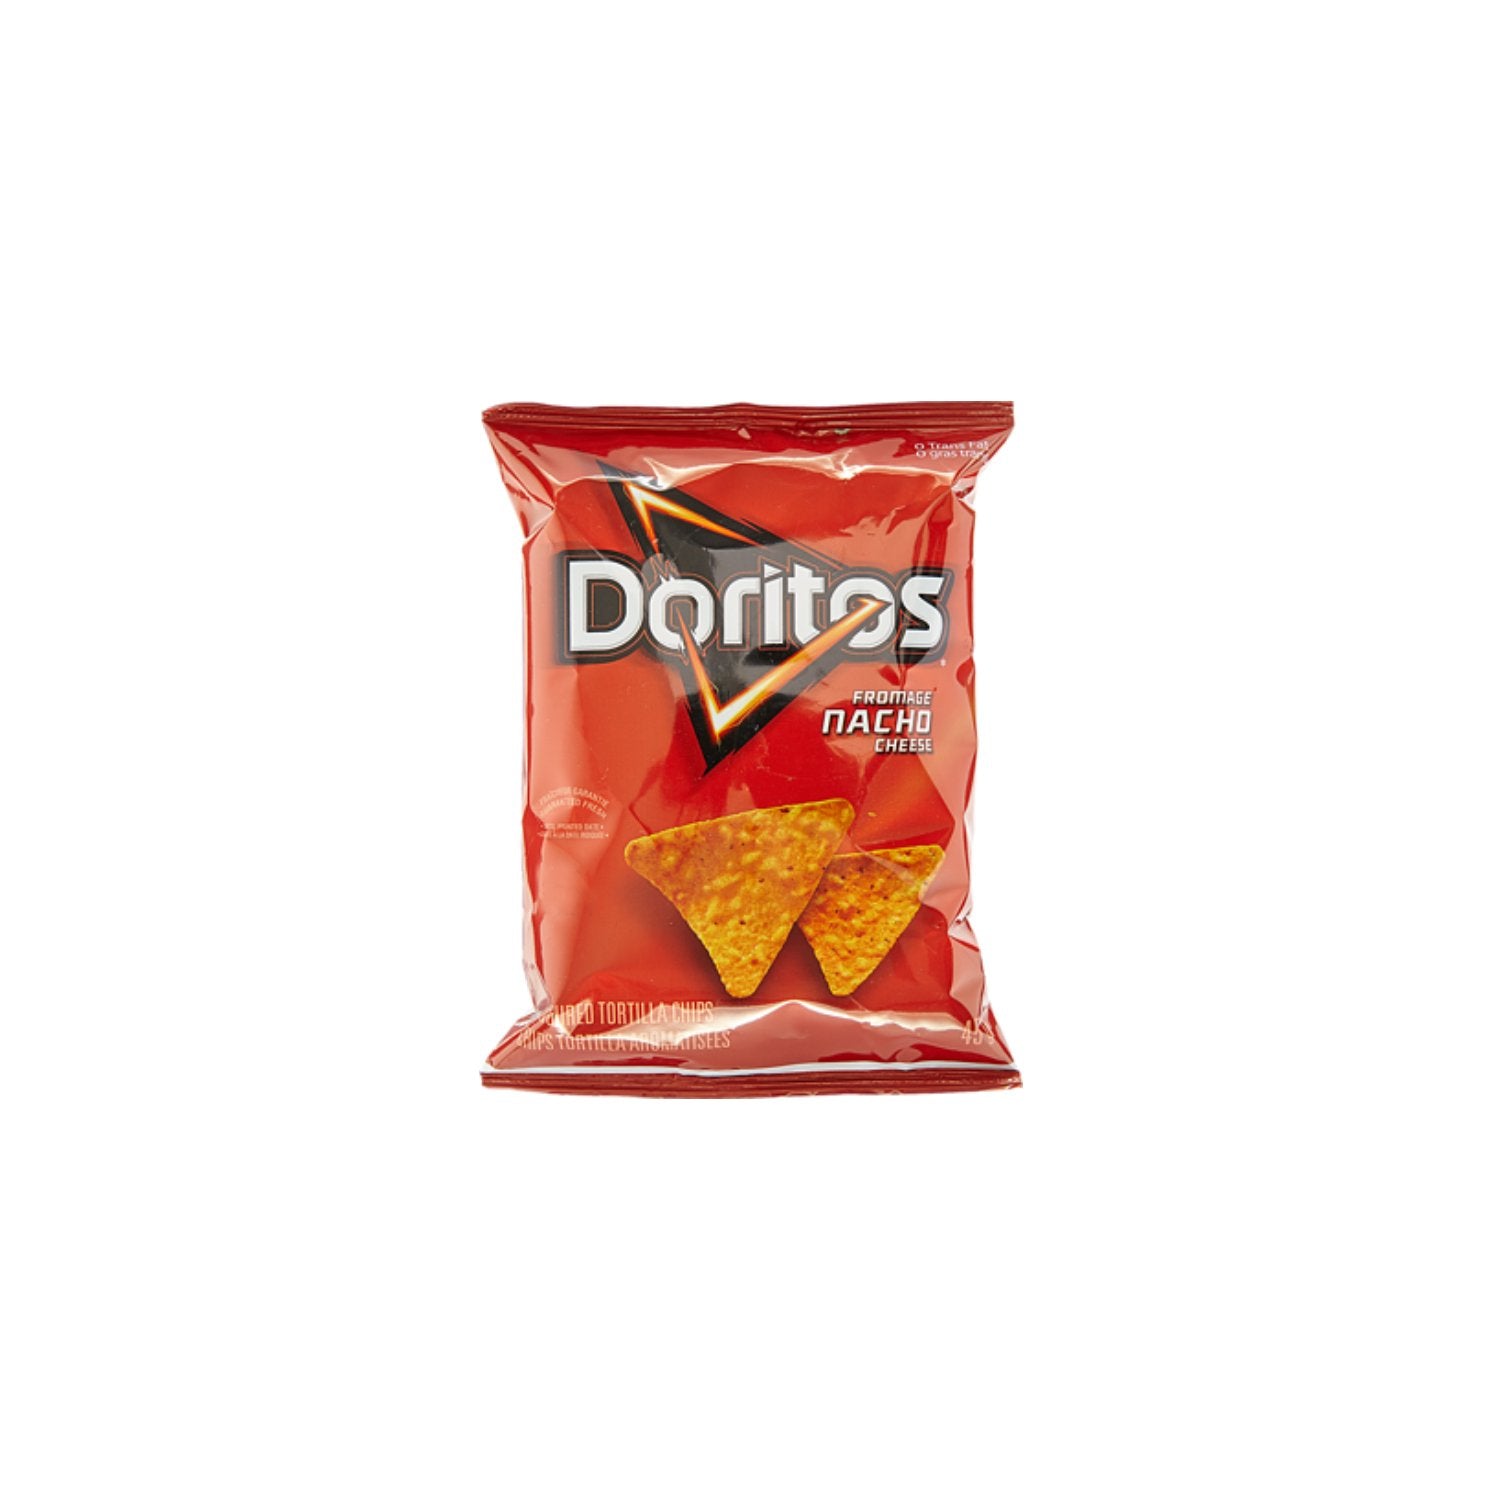 Doritos - Single Serve Size